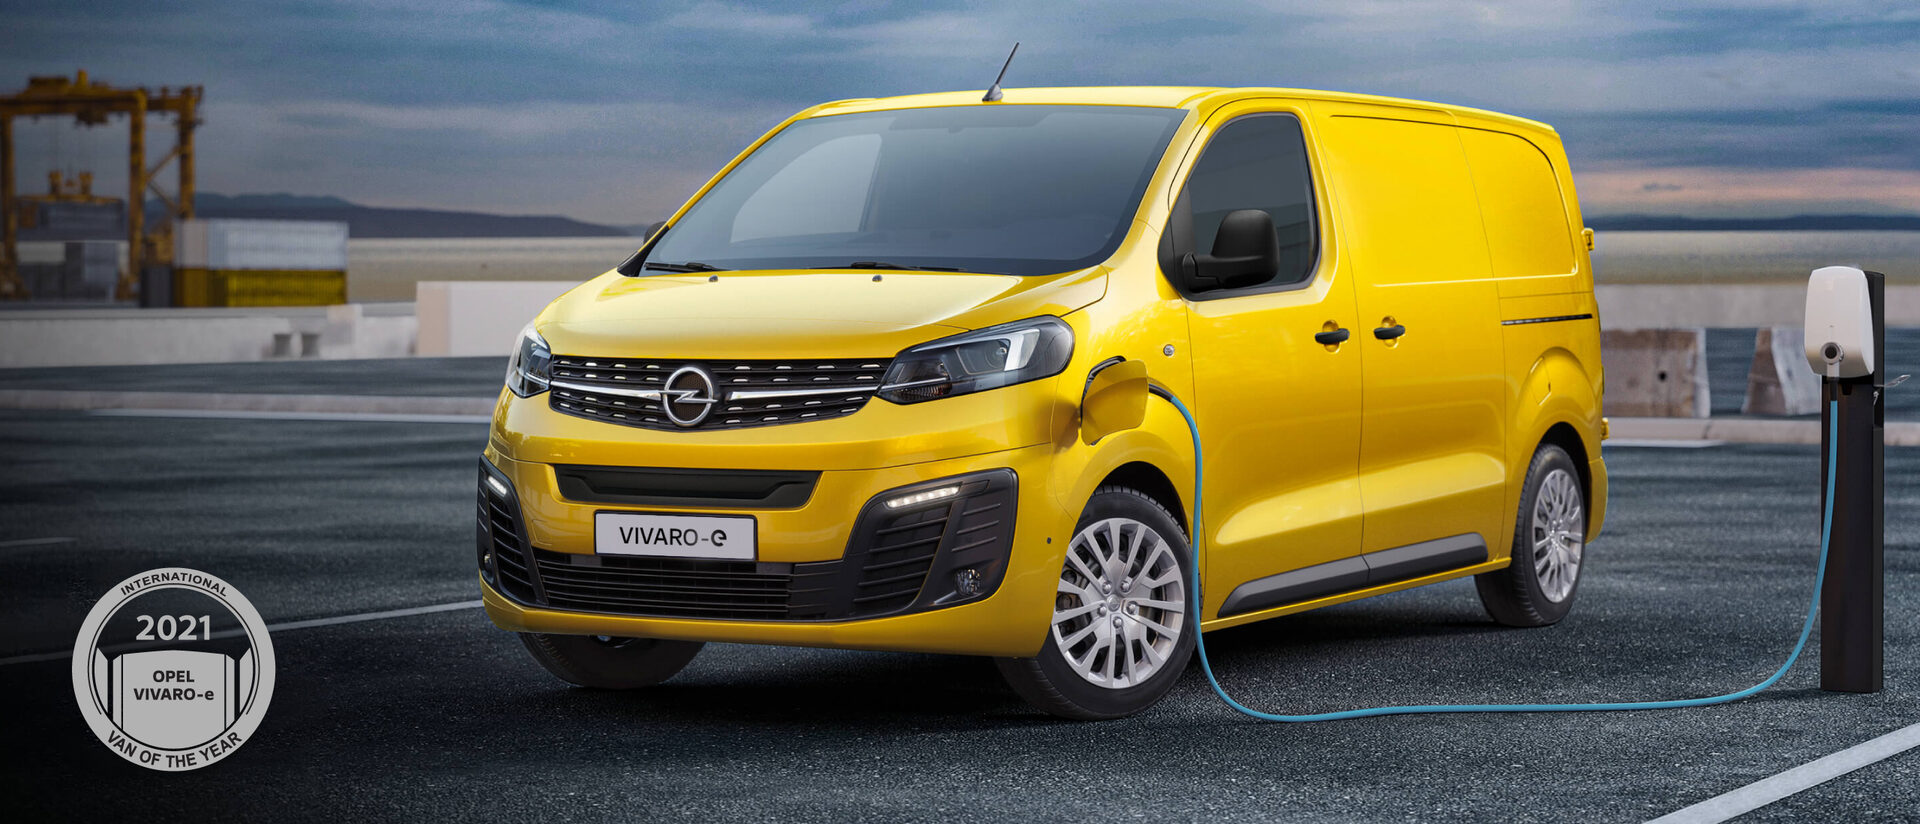 Vivaro-e is the industry’s most efficient and versatile electric van.